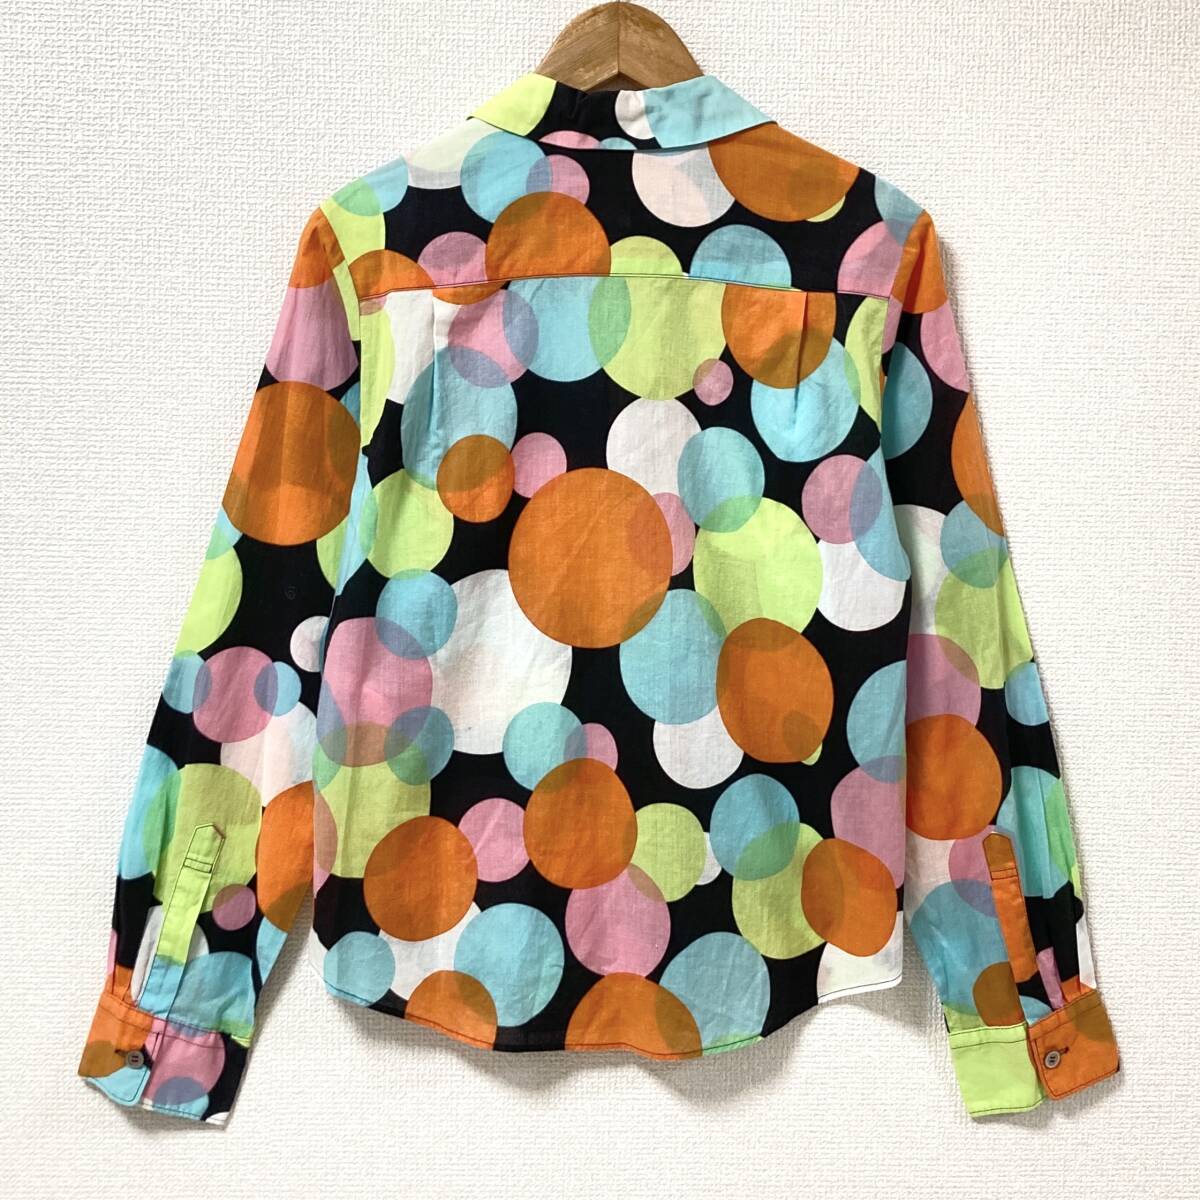 AD2003 tricot COMME des GARCONS circle collar colorful shirt blouse dot total pattern S size Toriko Comme des Garcons polka dot archive 4020080